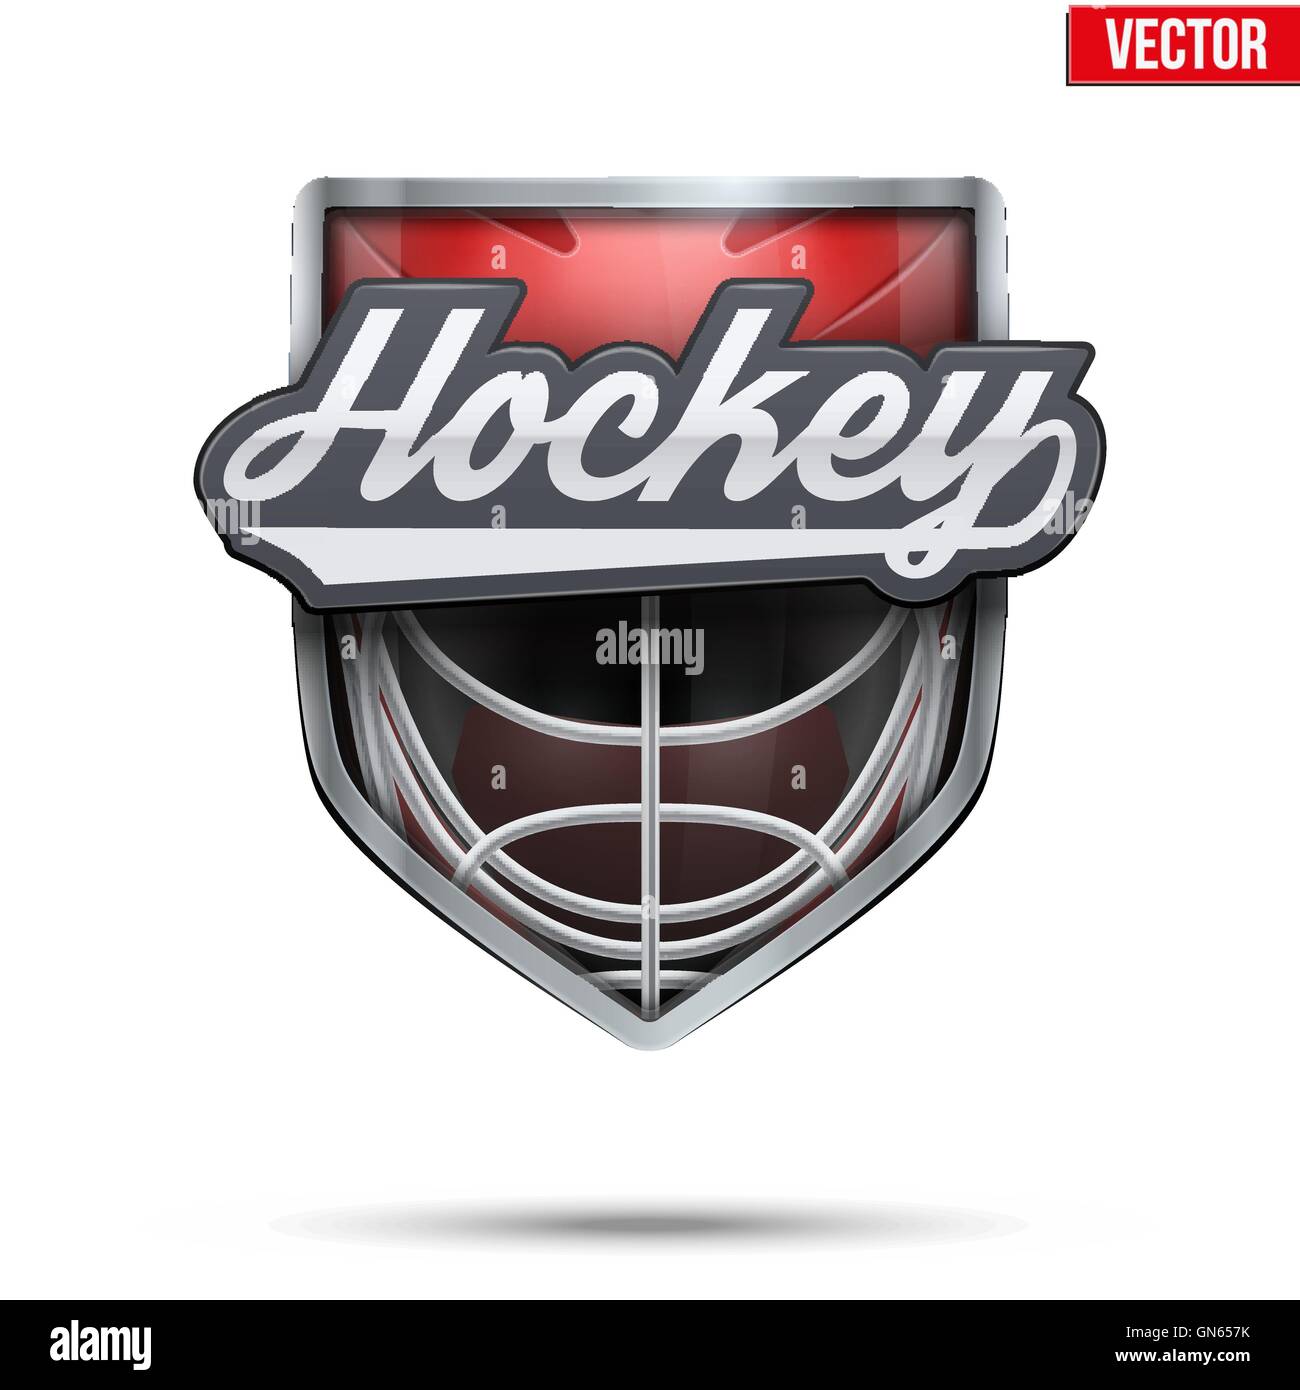 Premium Vector  Hockey championship logo